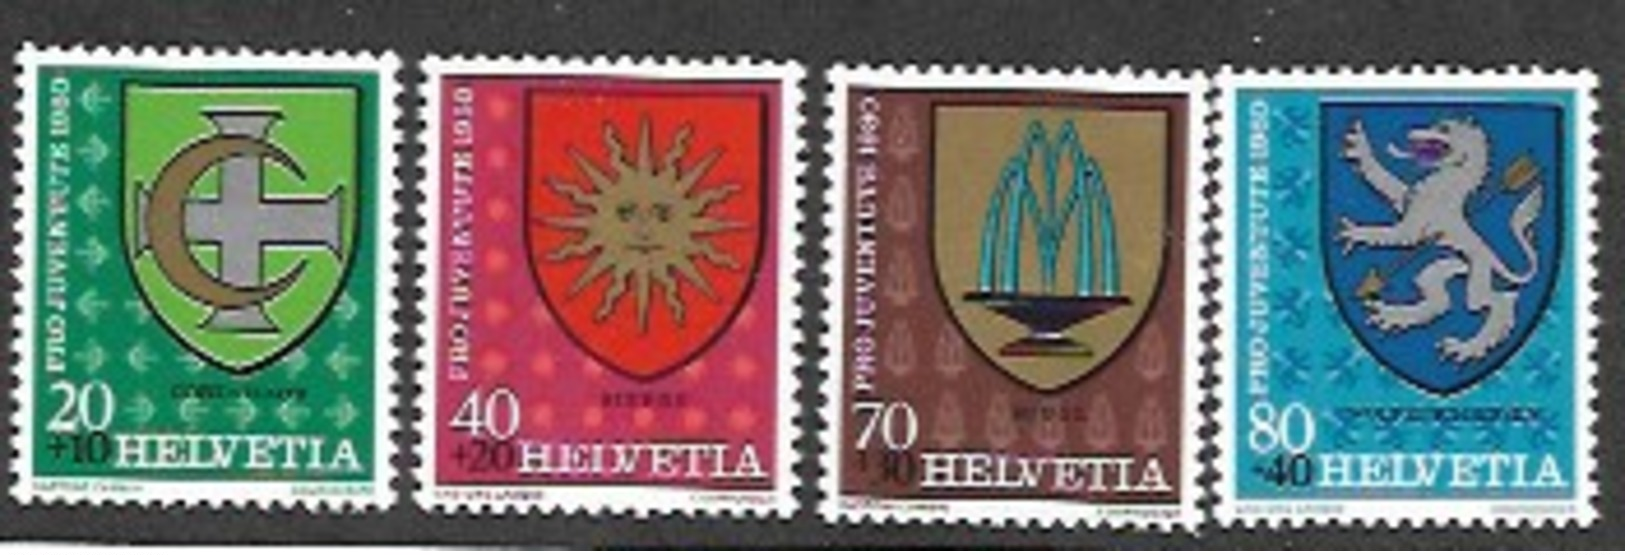 Switzerland,  Scott 2018 # B475-B478,  Issued 1980,  Set Of 4,  MNH,  Cat $ 4.90, - Unused Stamps